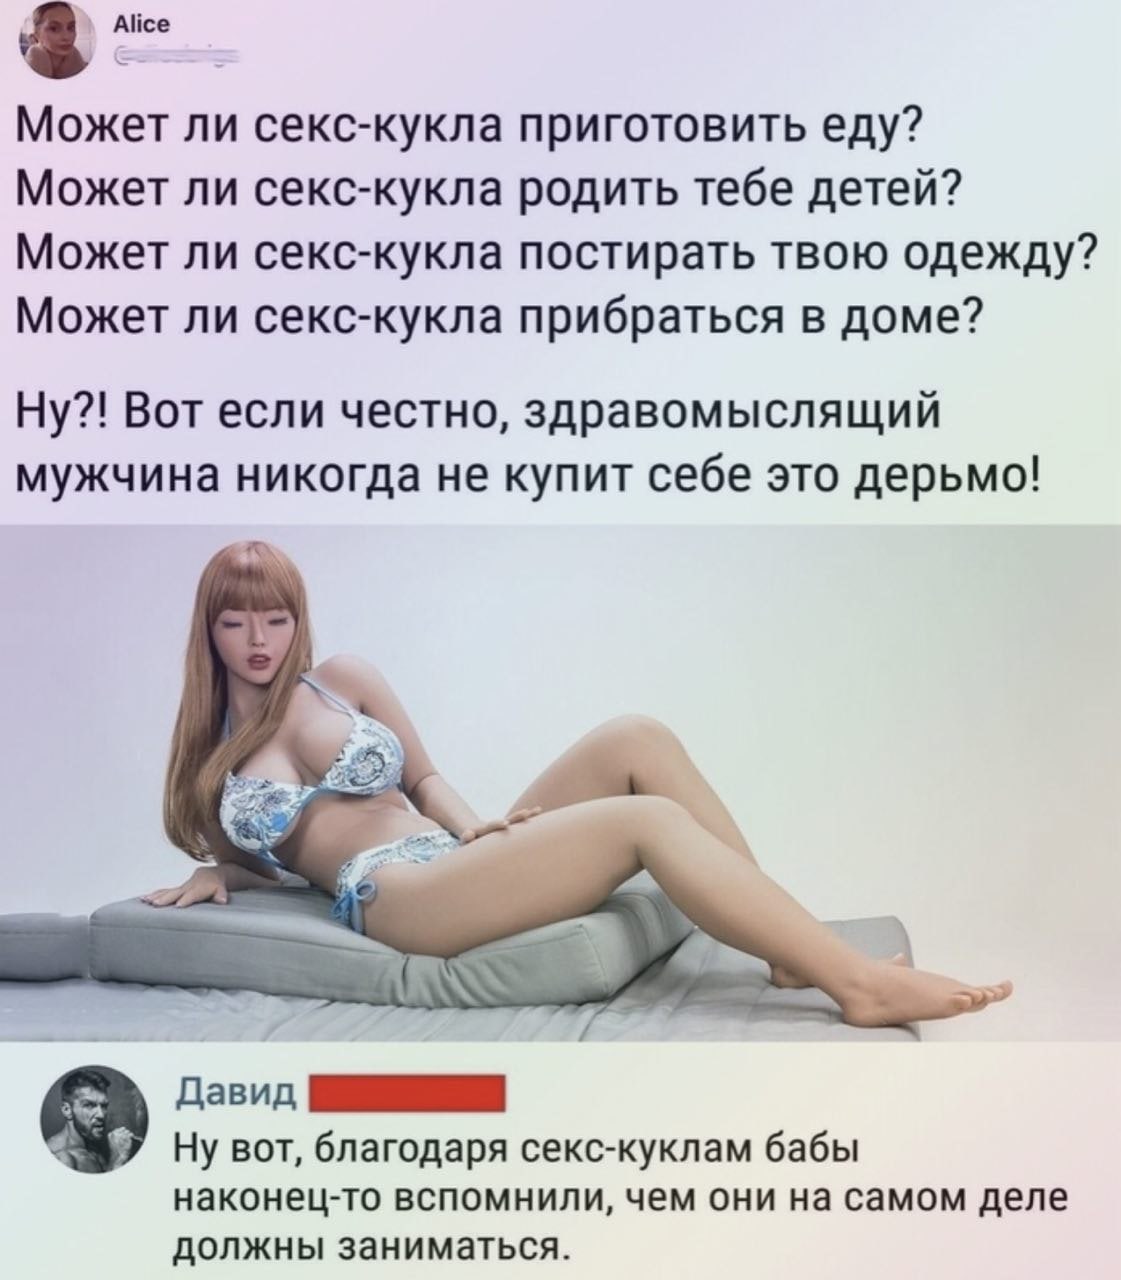 Sex Porno Порно Видео | автонагаз55.рф